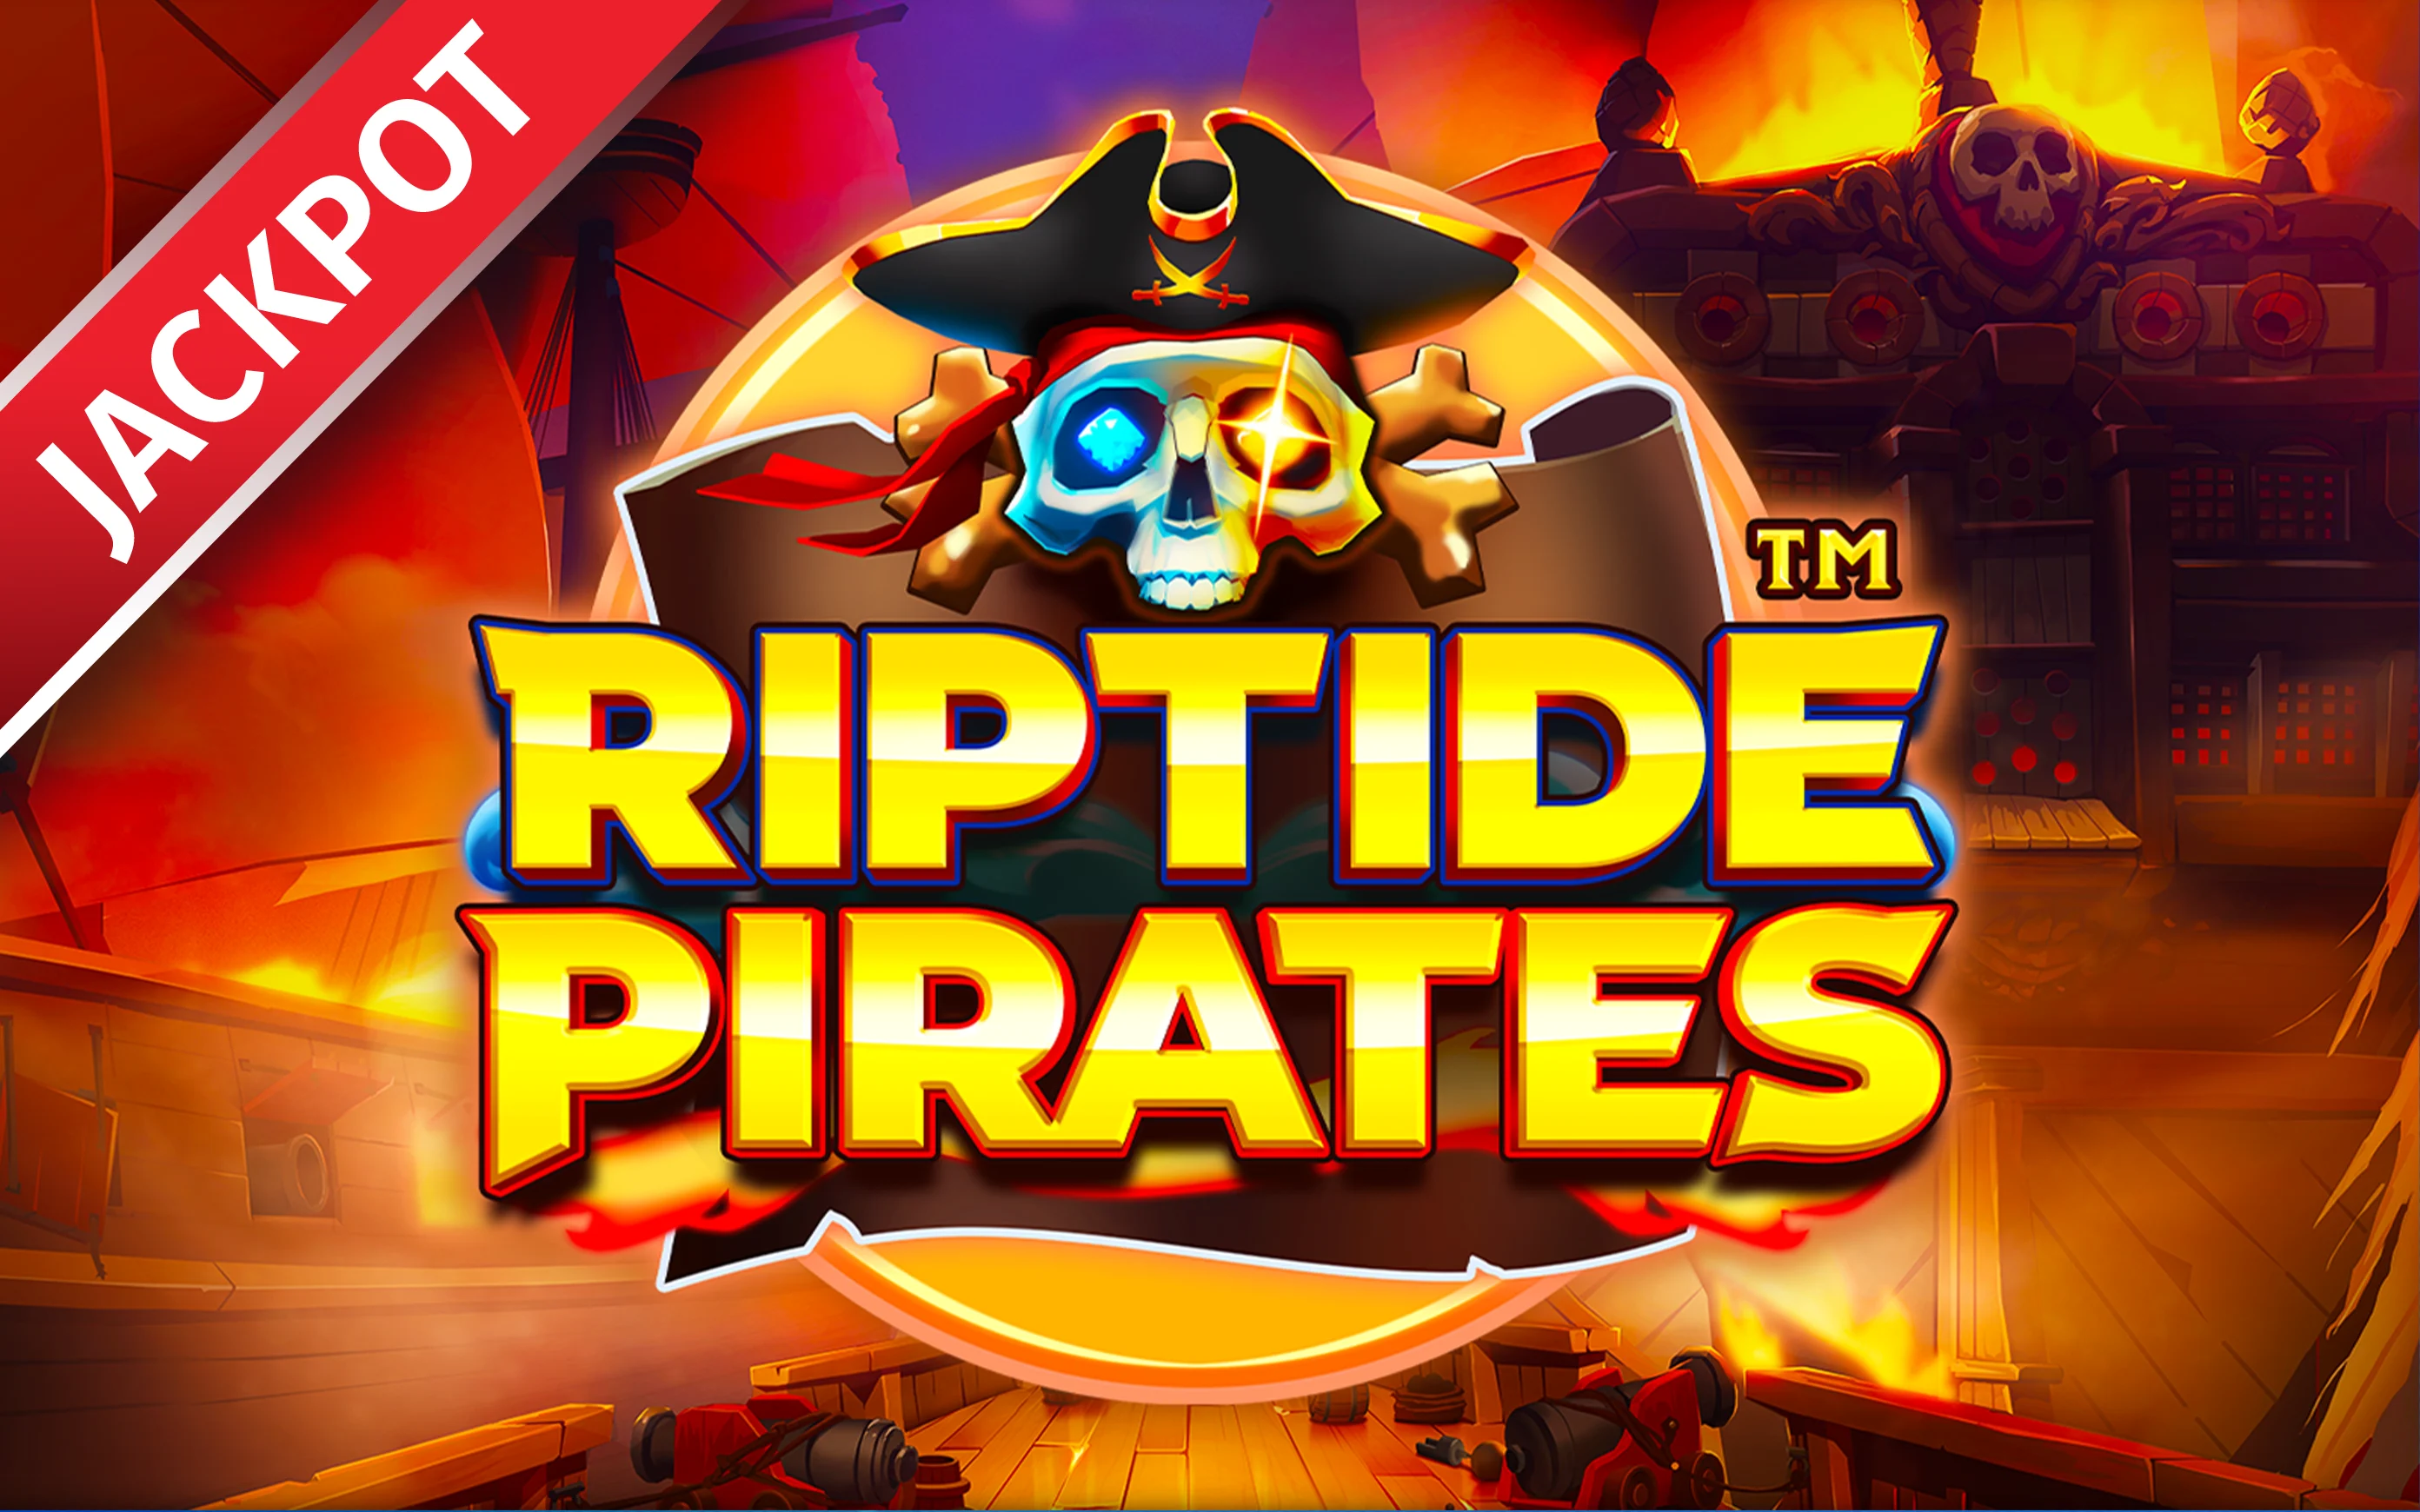 Juega a Riptide Pirates™ en el casino en línea de Starcasino.be